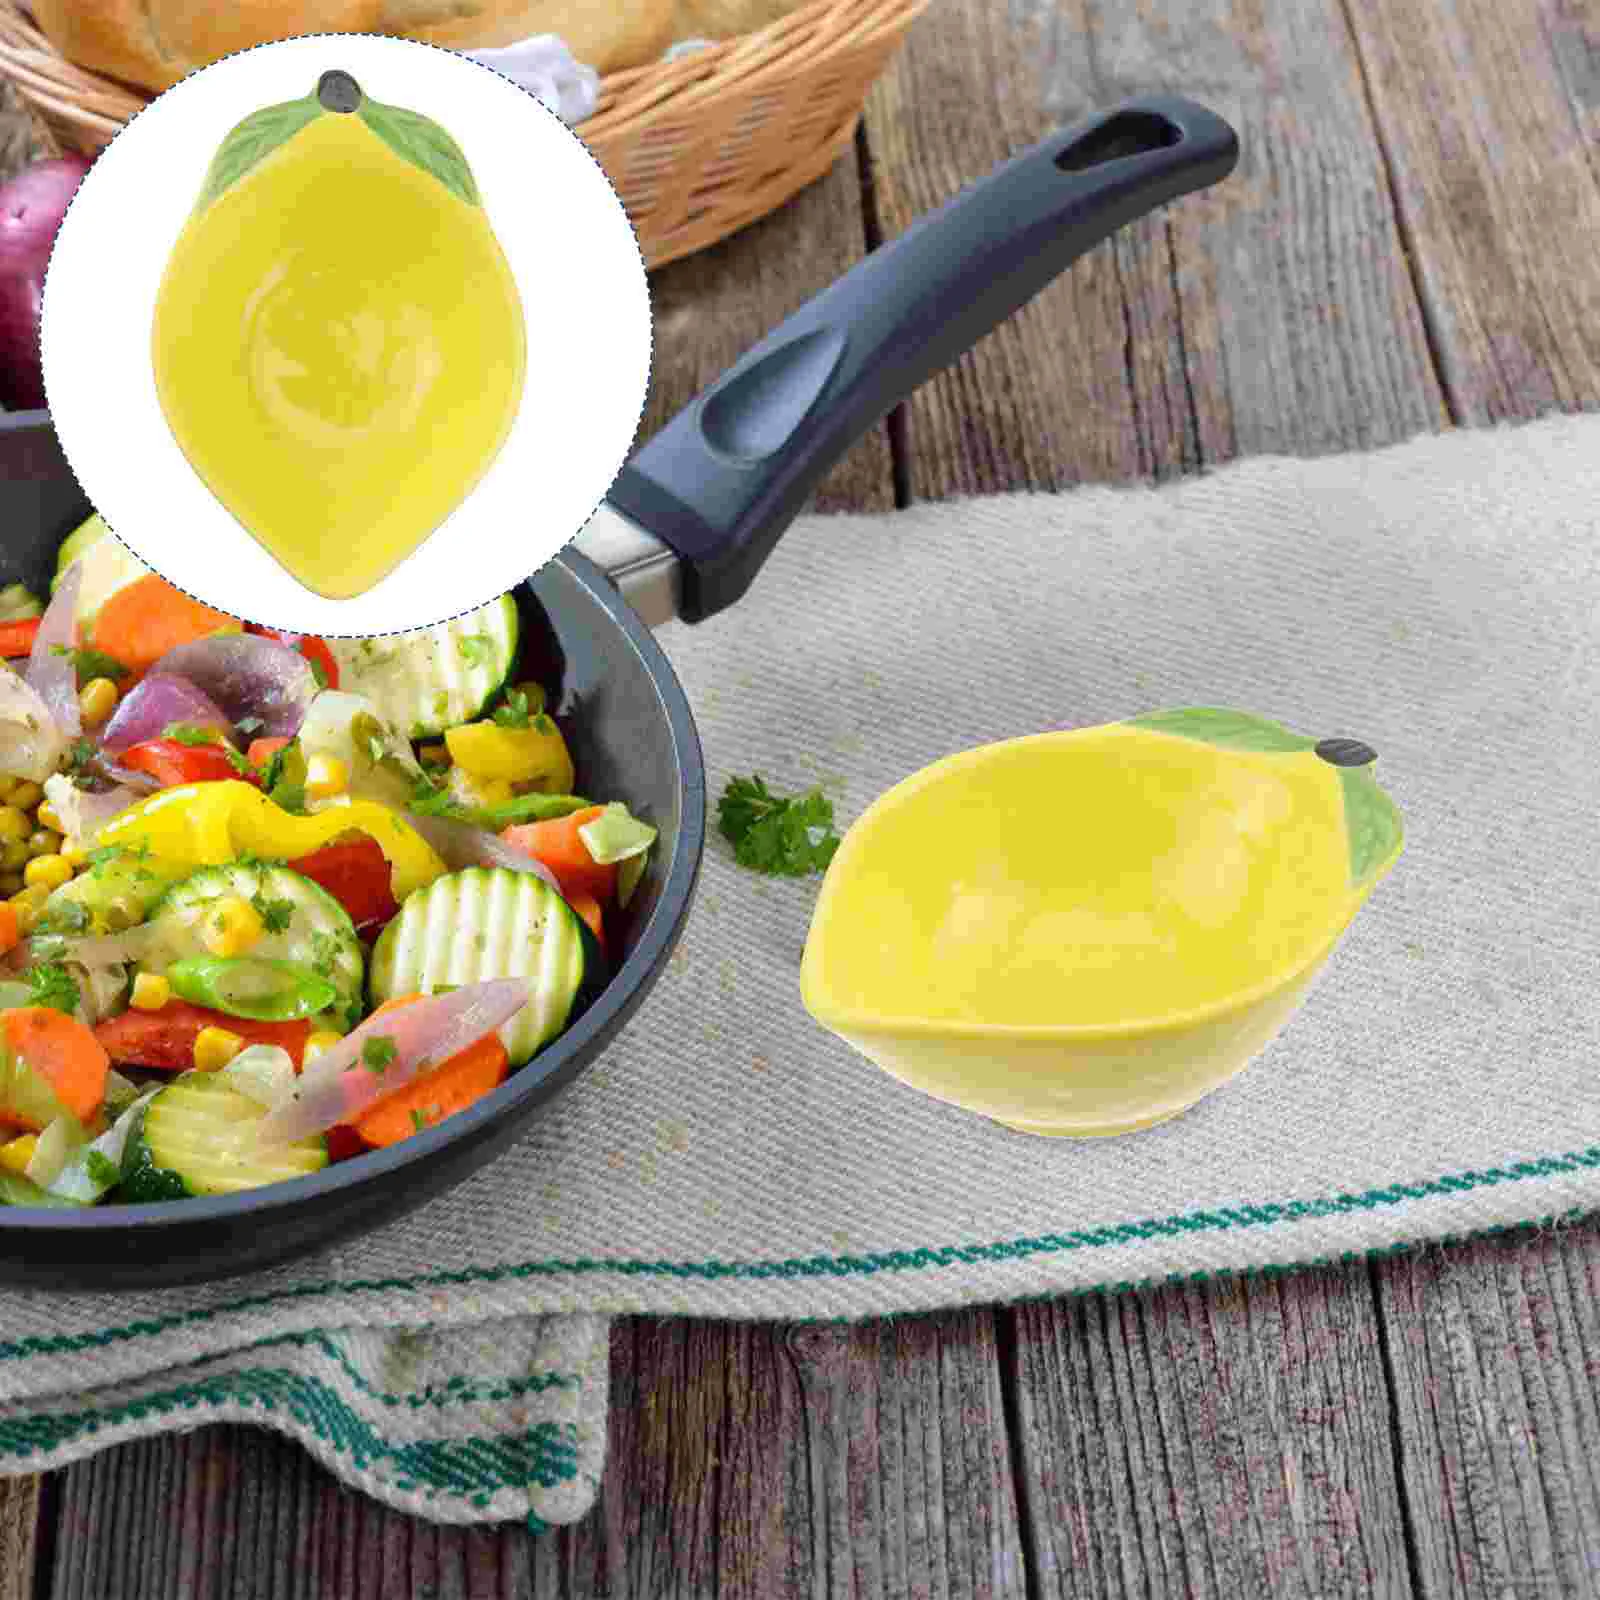 

Bowl Bowls Ceramic Plates Serving Dish Plate Sauce Fruit Dessert Appetizer Dishes Dipping Salad Snack Tray Shaped Lemon Dinner